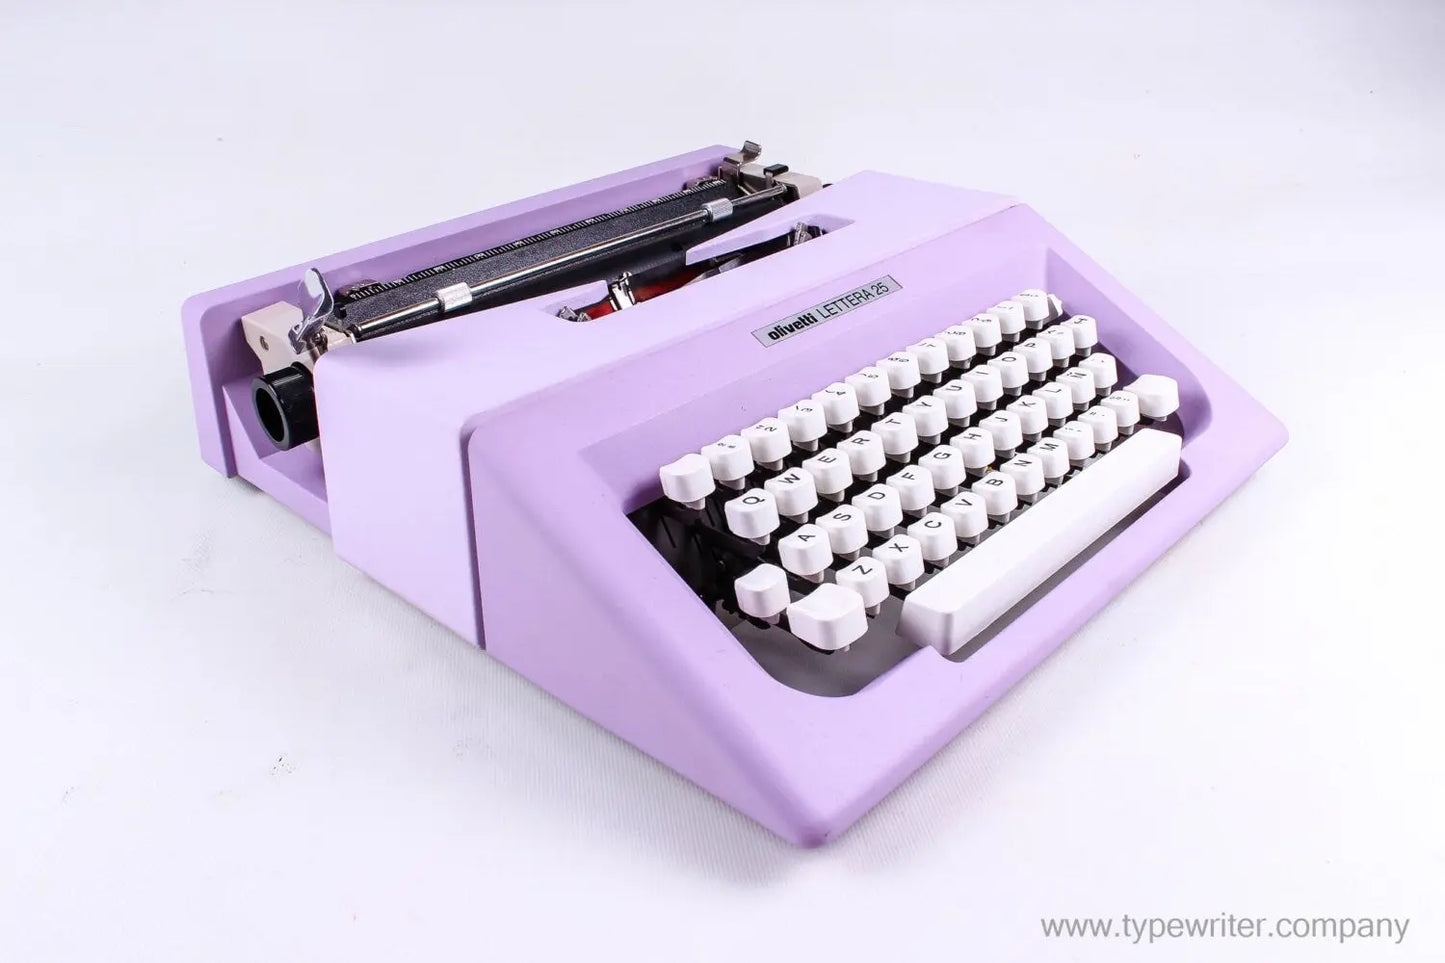 Olivetti Lettera 25 Lilac Manual Typewriter, Professionally Serviced - ElGranero Typewriter.Company